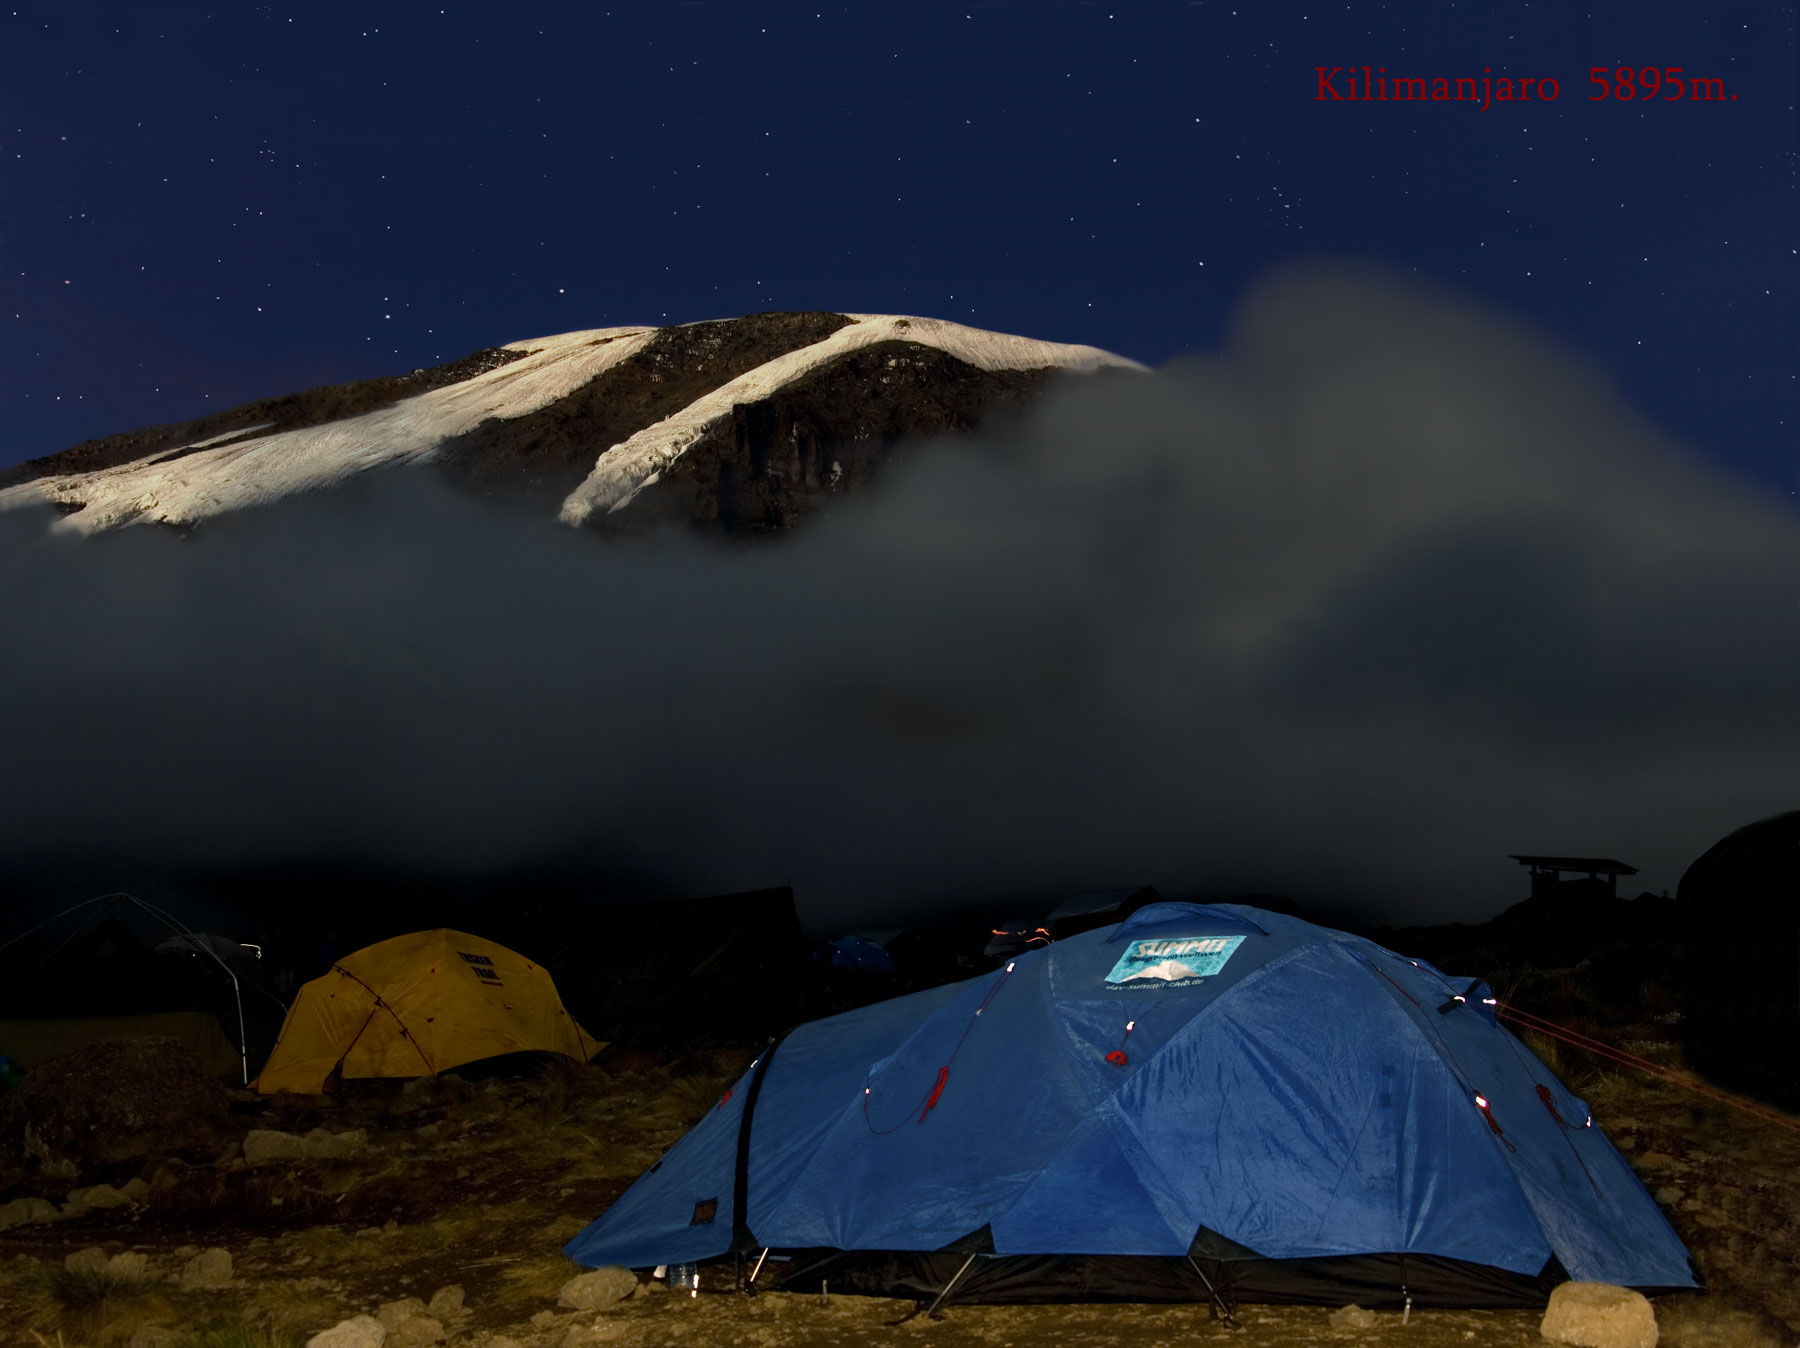 !kilimanjaro 019 karango camp night tent and summit (171) new for 18x24.jpg